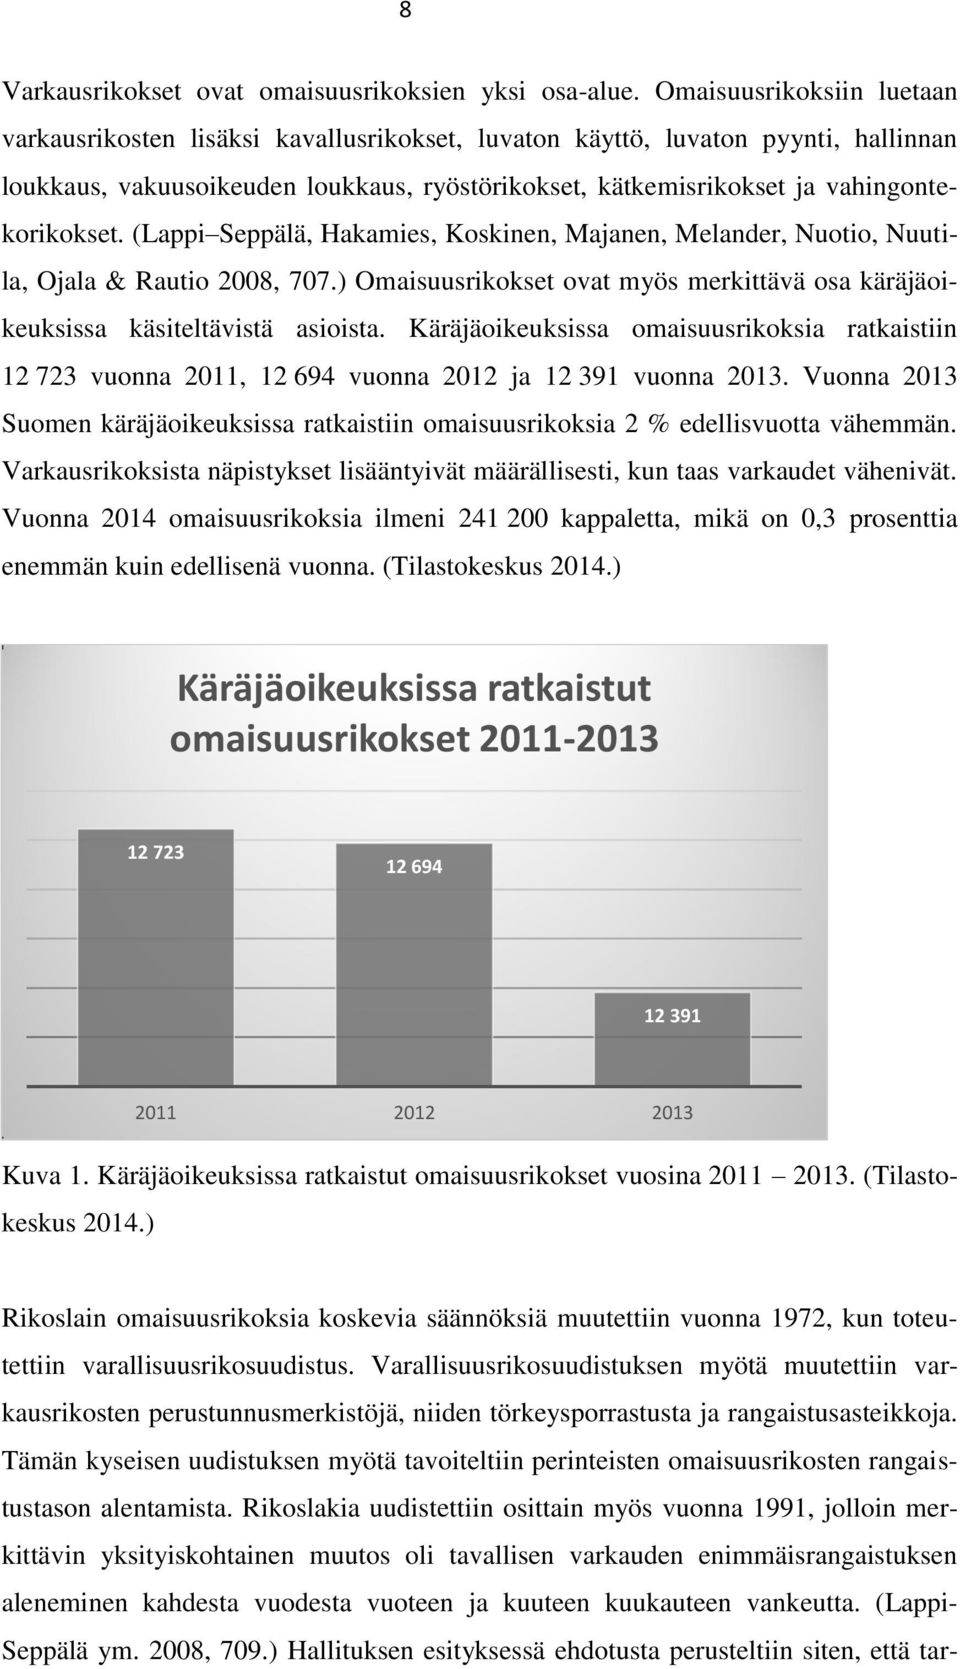 vahingontekorikokset. (Lappi Seppälä, Hakamies, Koskinen, Majanen, Melander, Nuotio, Nuutila, Ojala & Rautio 2008, 707.